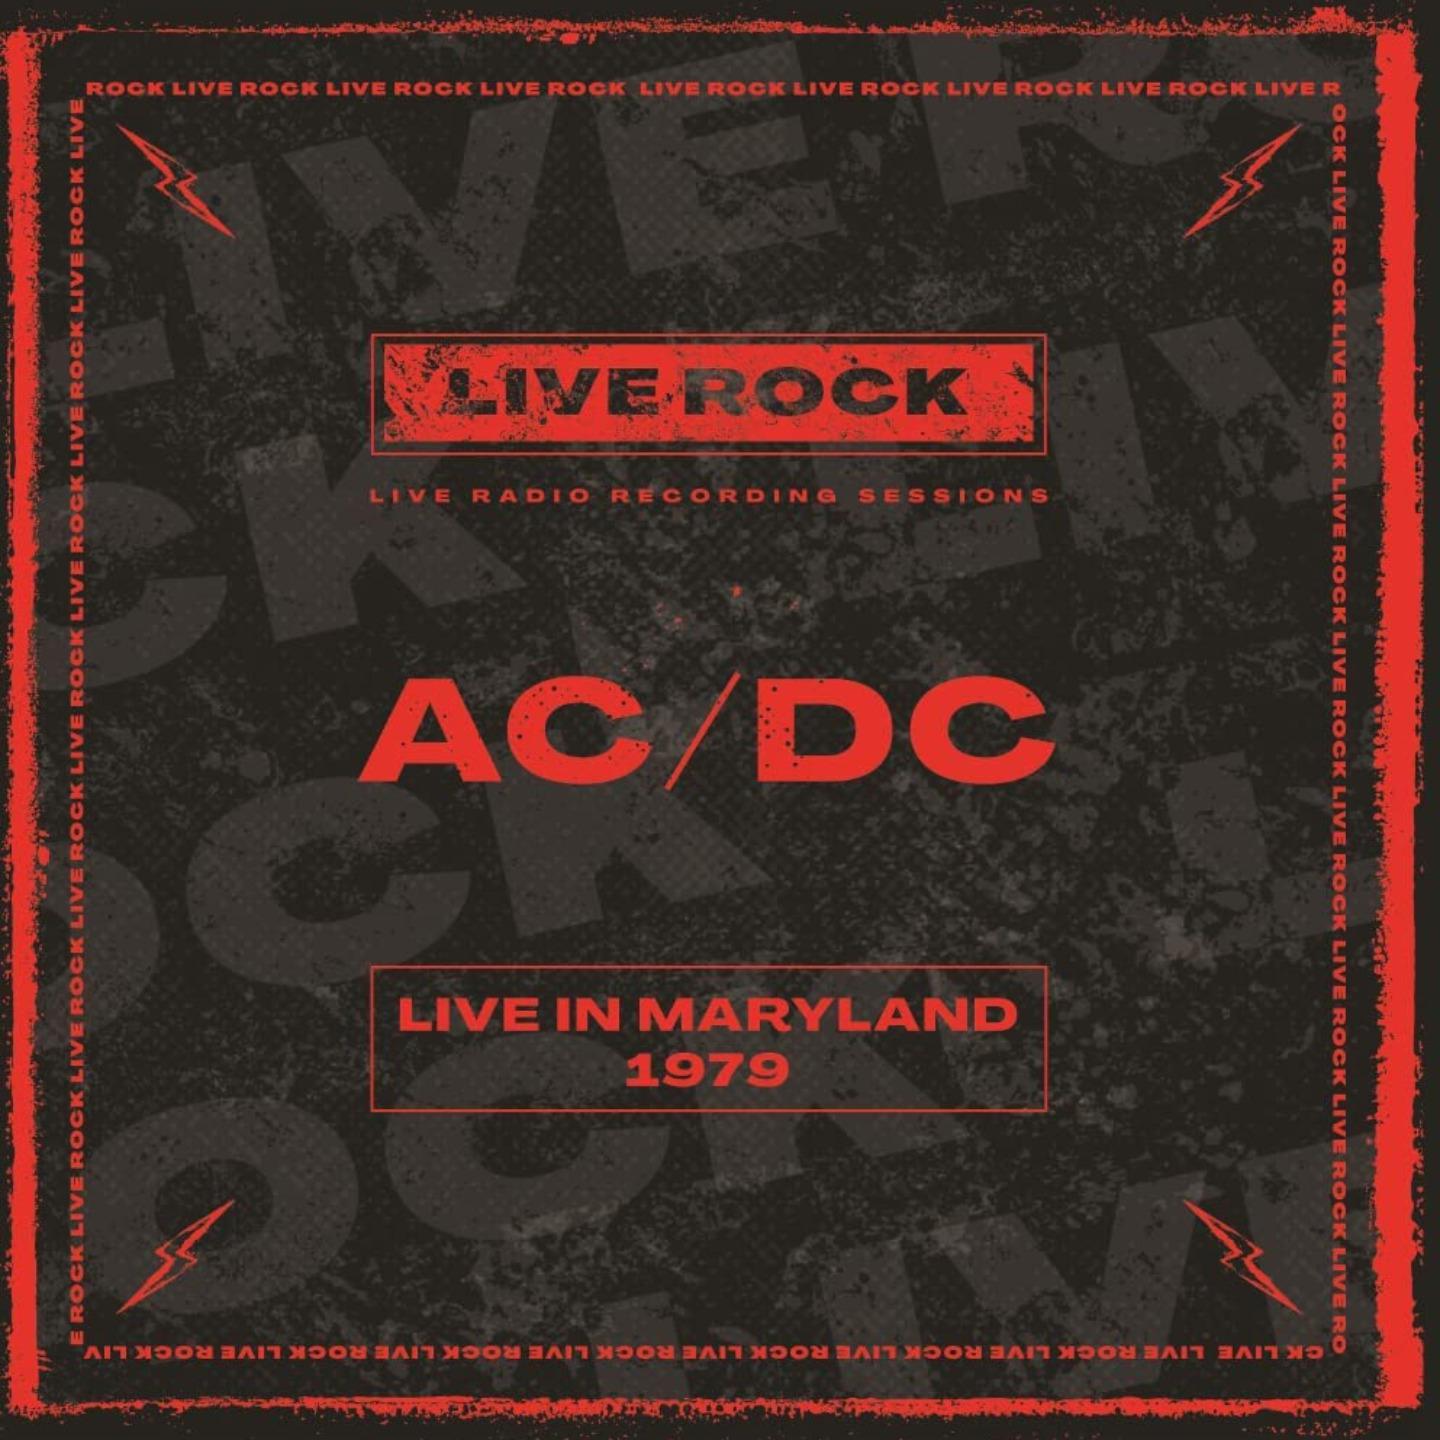 AC/DC - Whole Lotta Rosie / Rocker (Live)